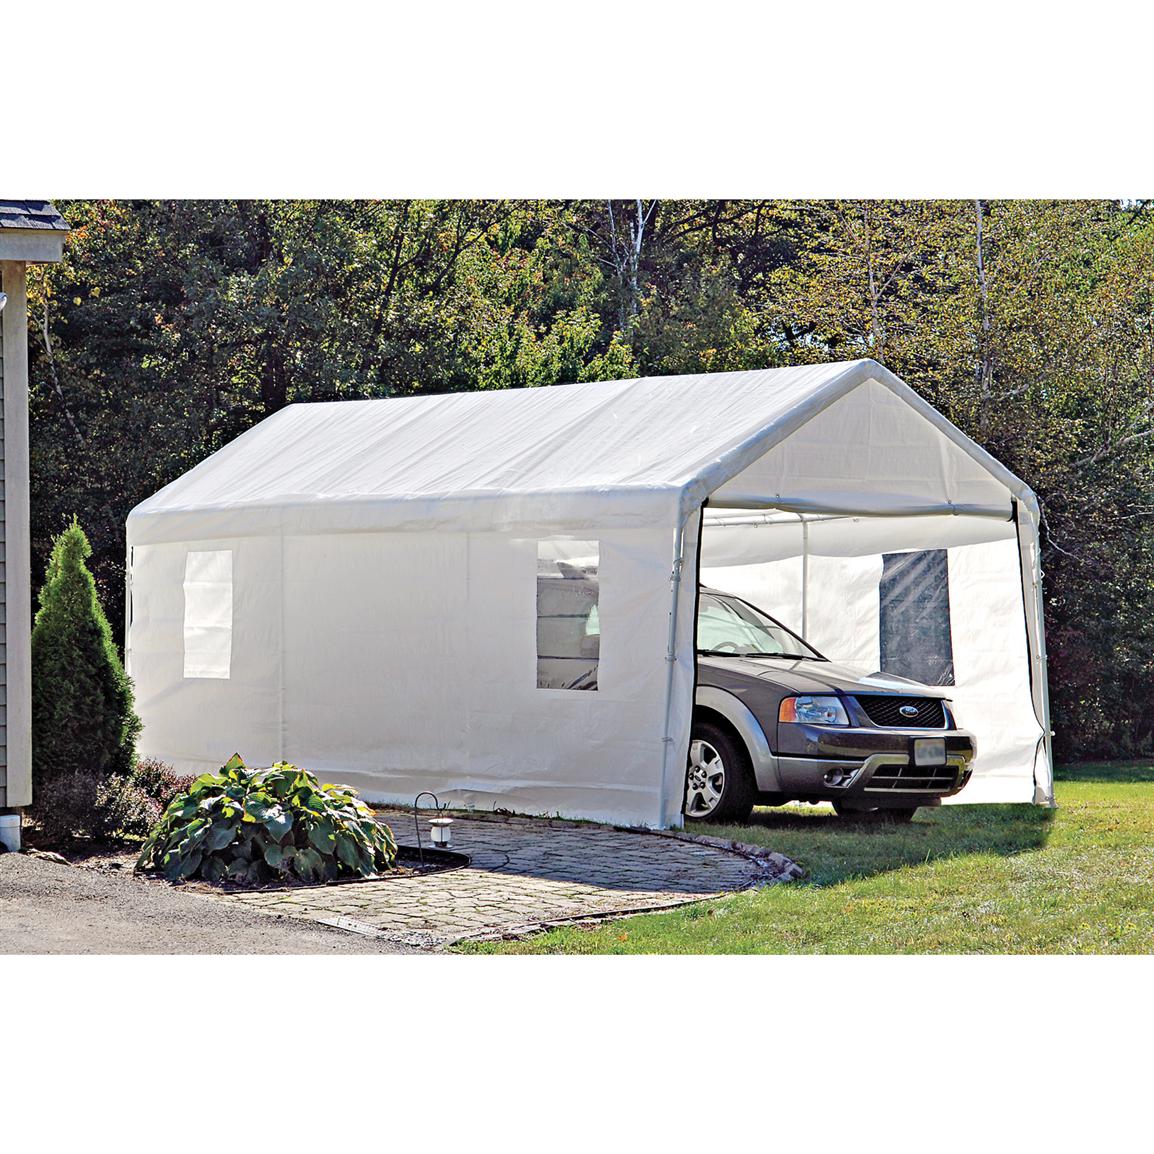 Shelterlogic 10 foot x 20 foot Portable Garage Canopy Carport, White 